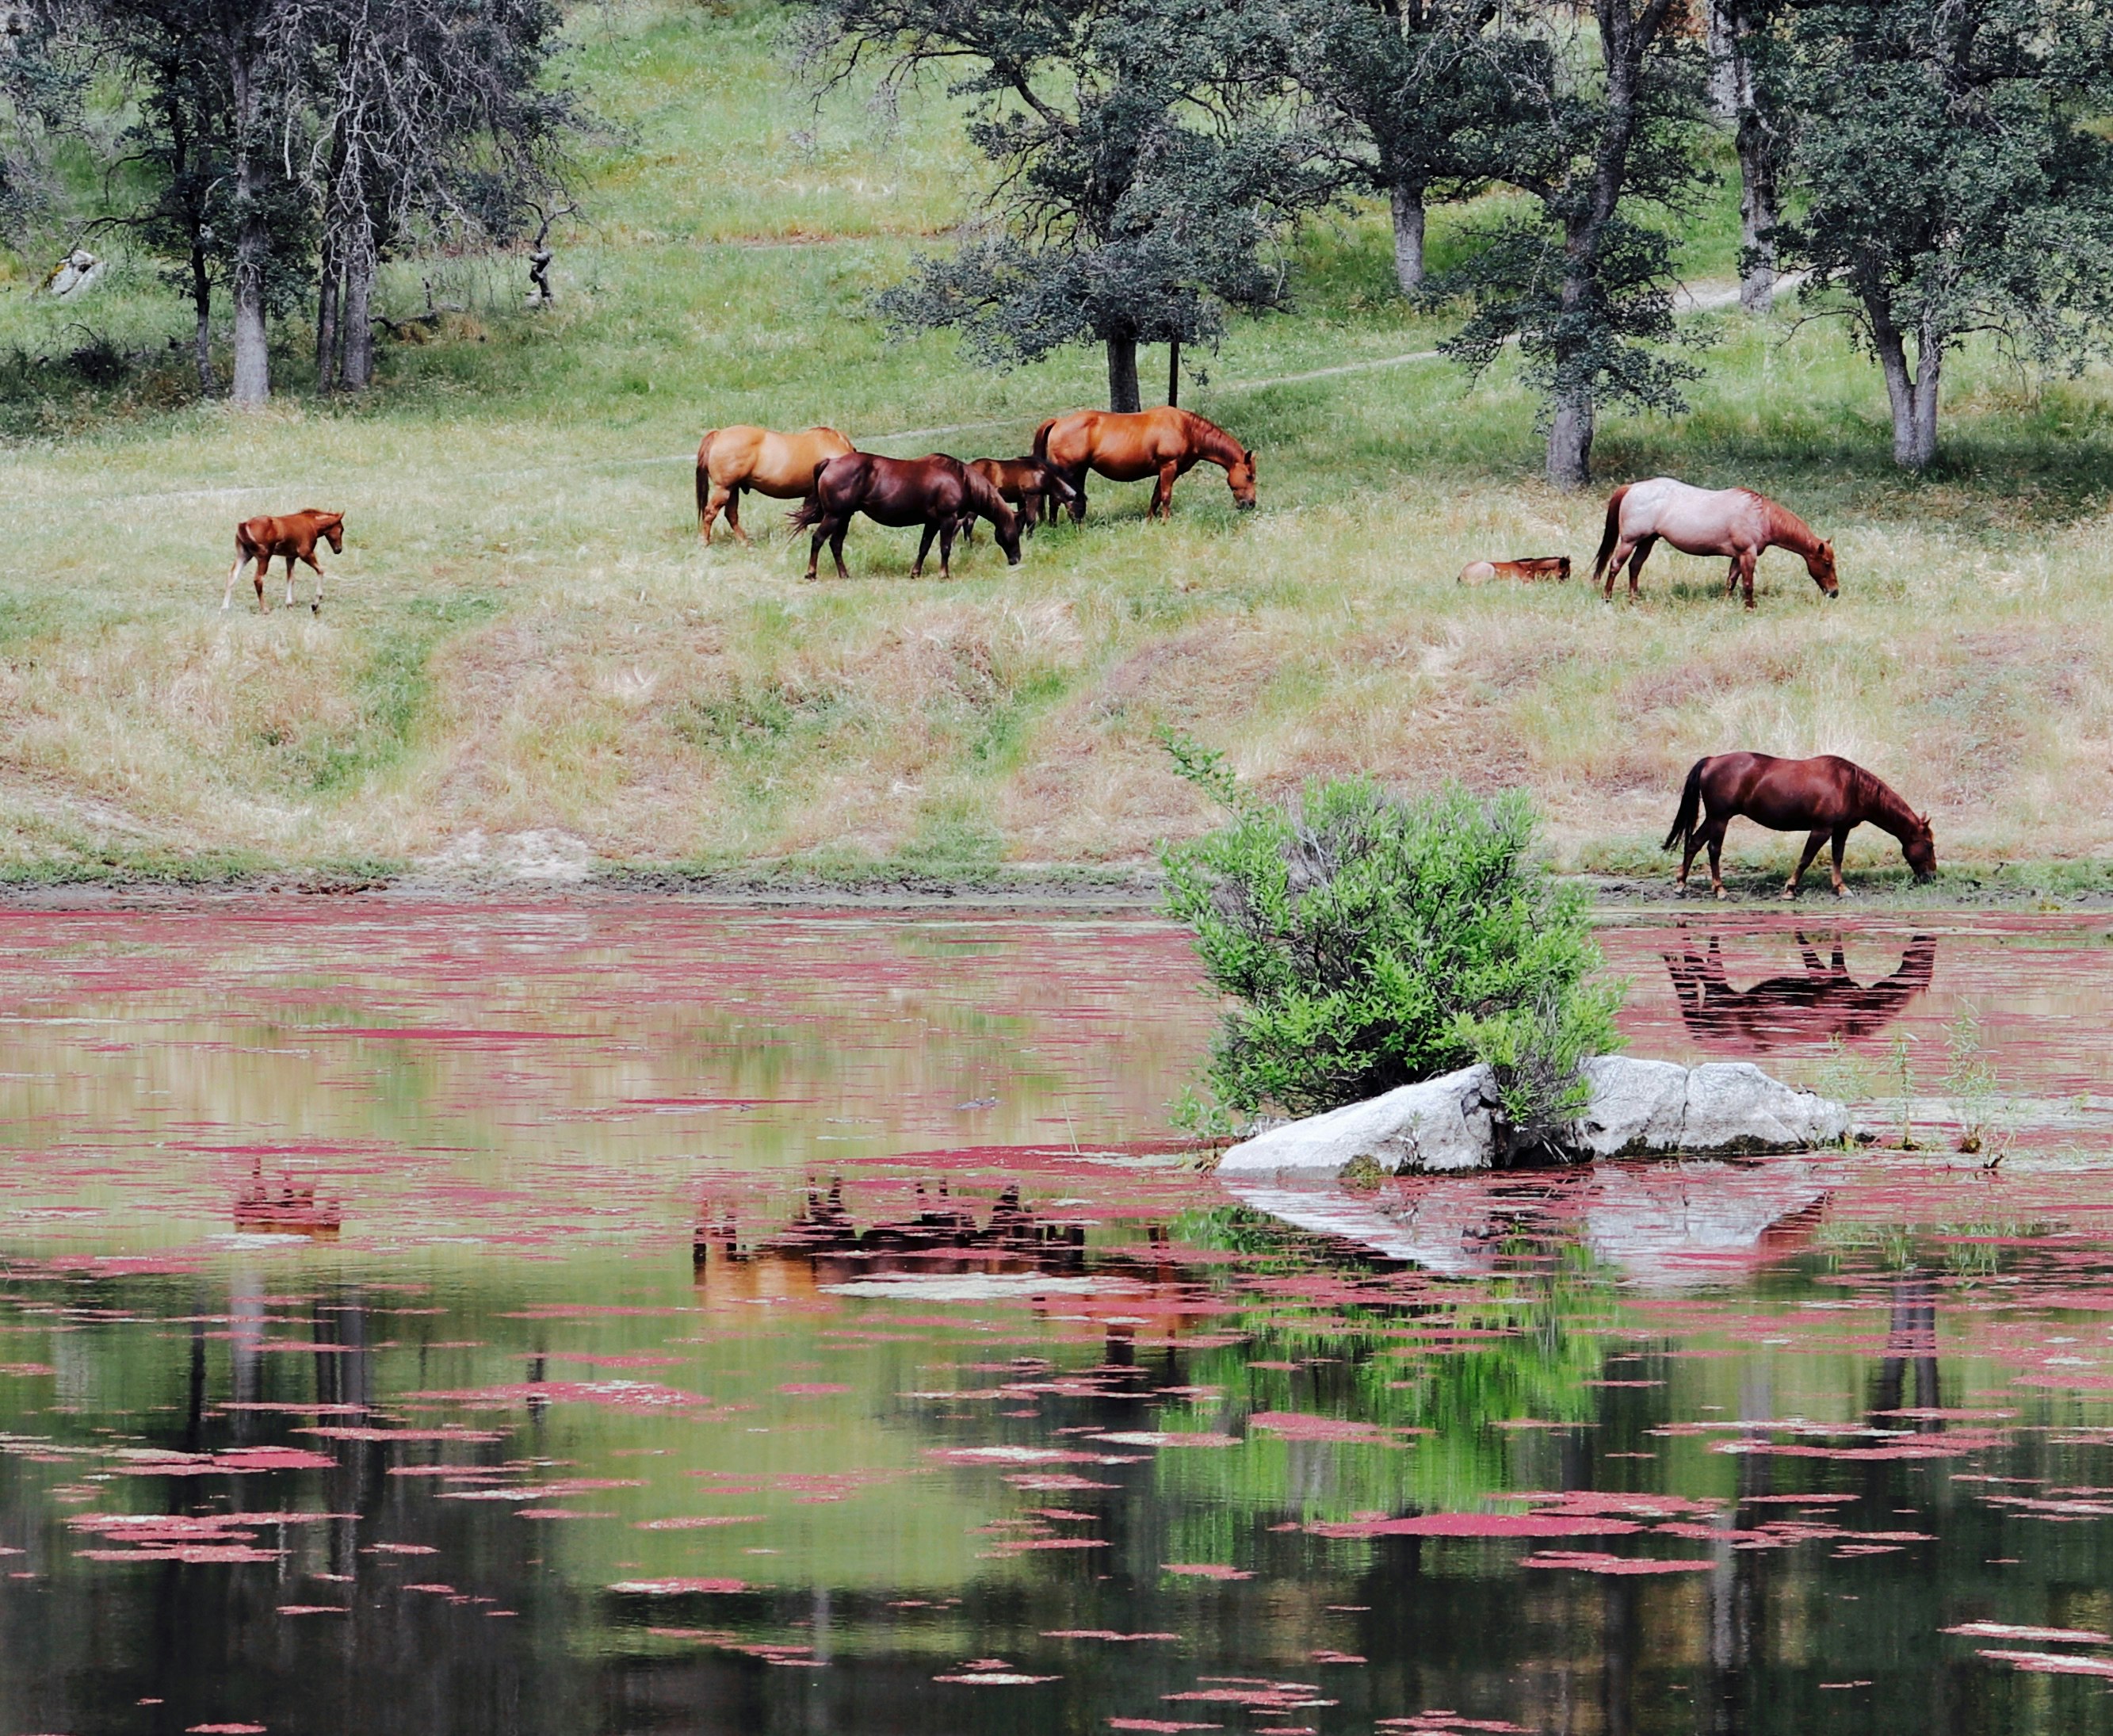 horses near body of water